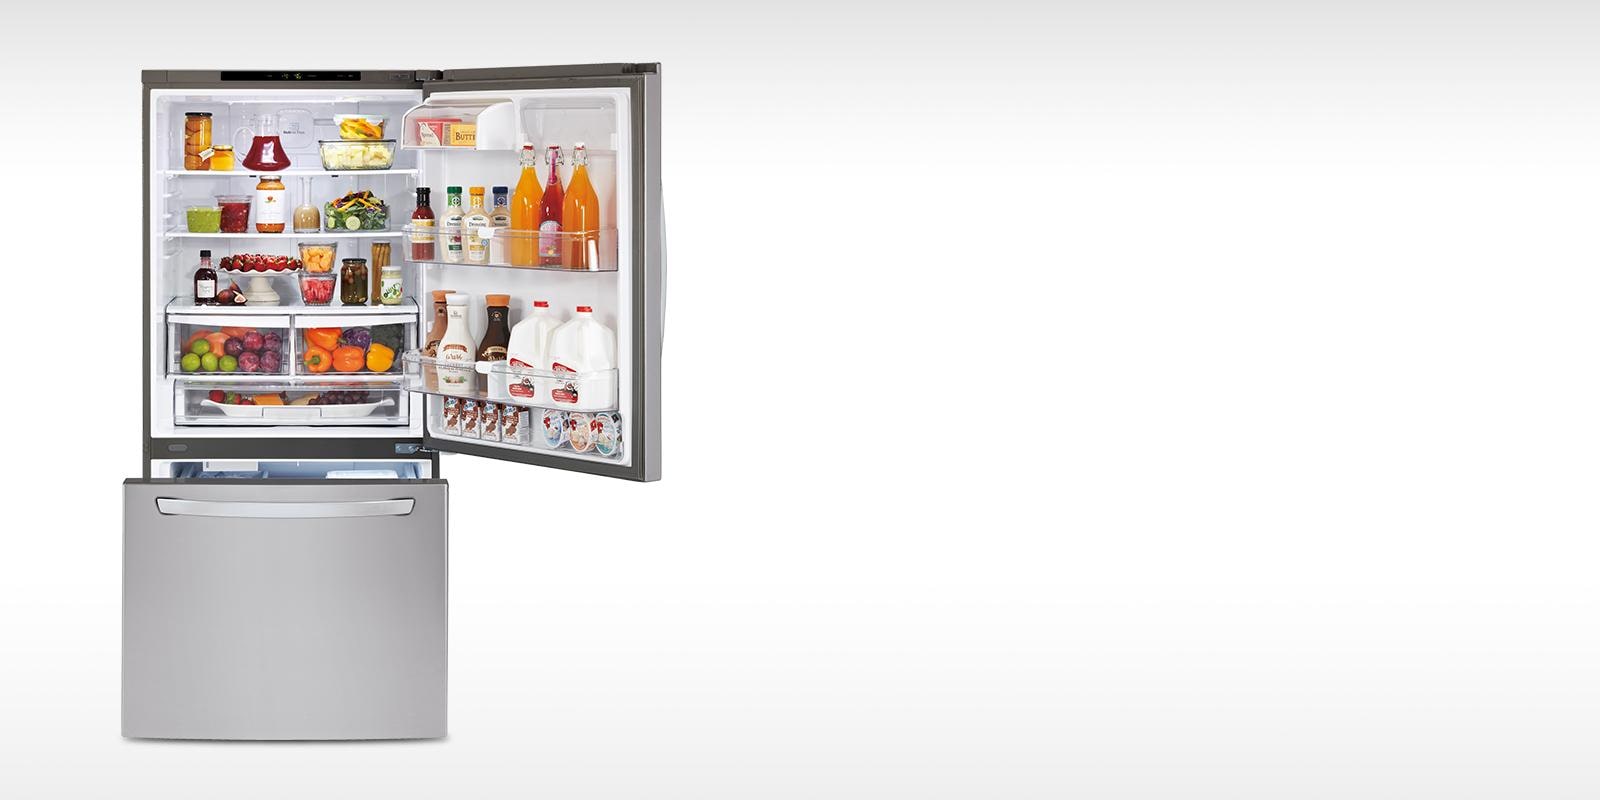 LG refrigerator styled interior